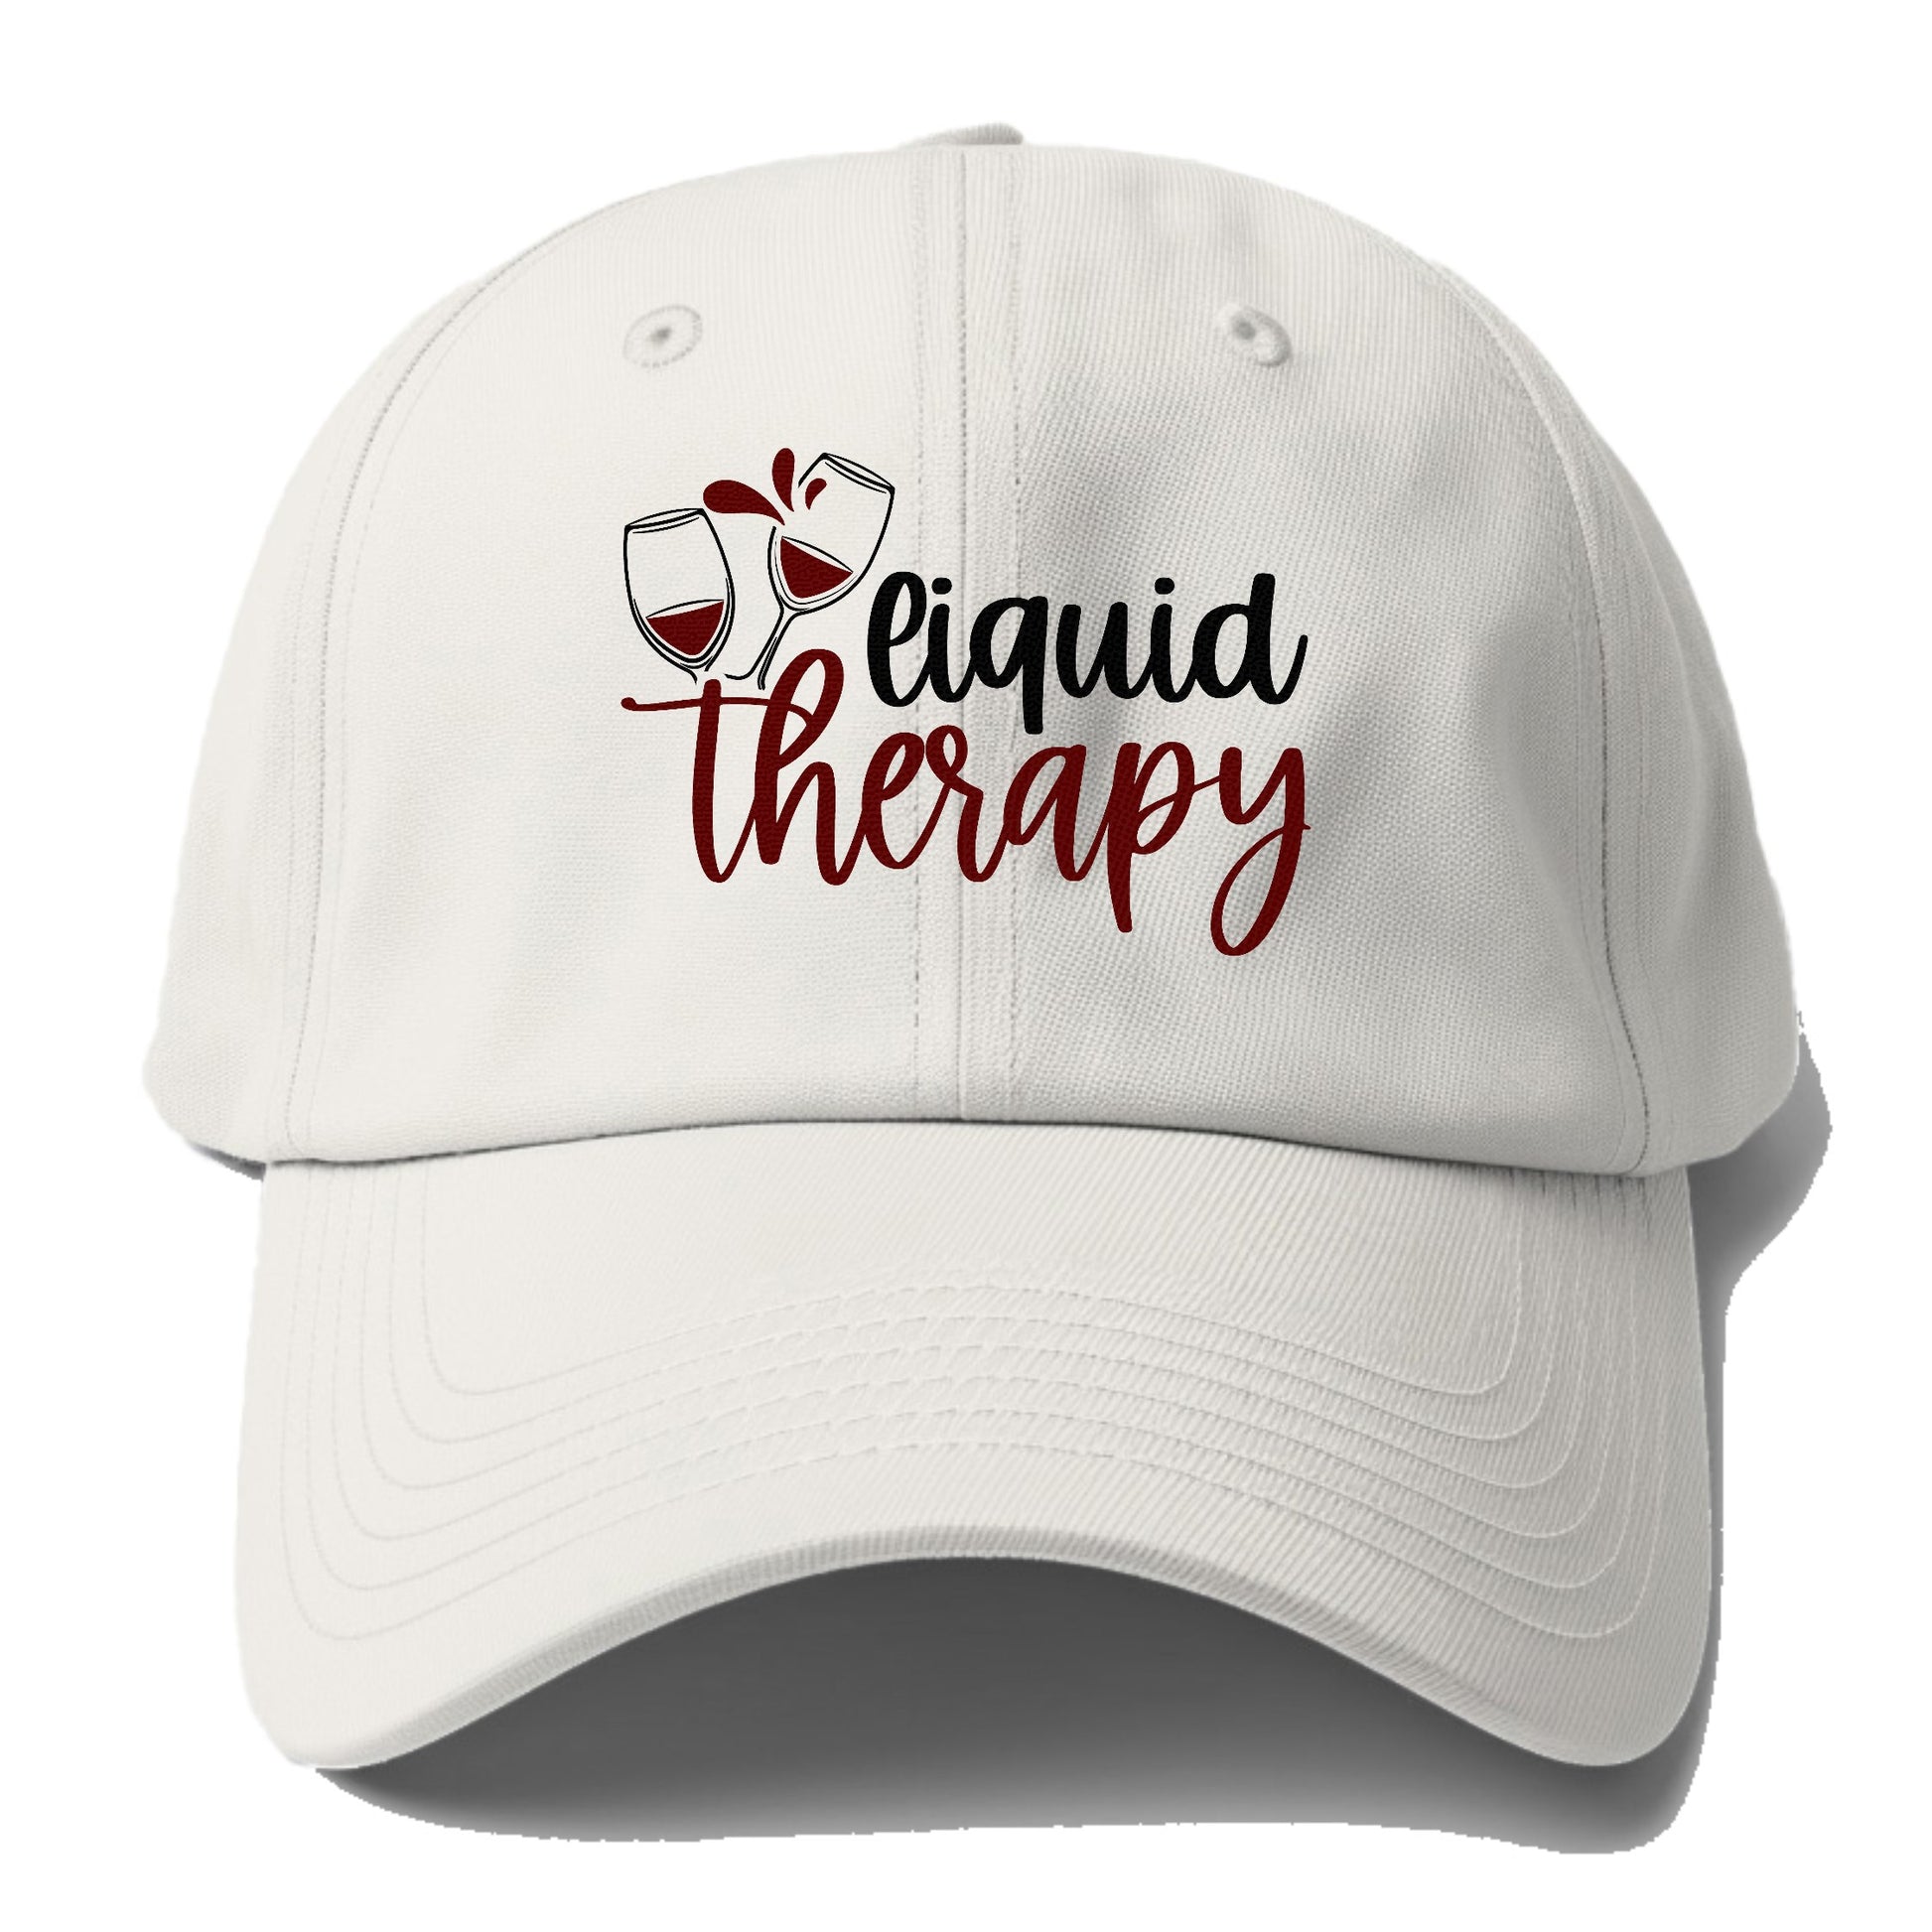 liquid therapy 2 Hat